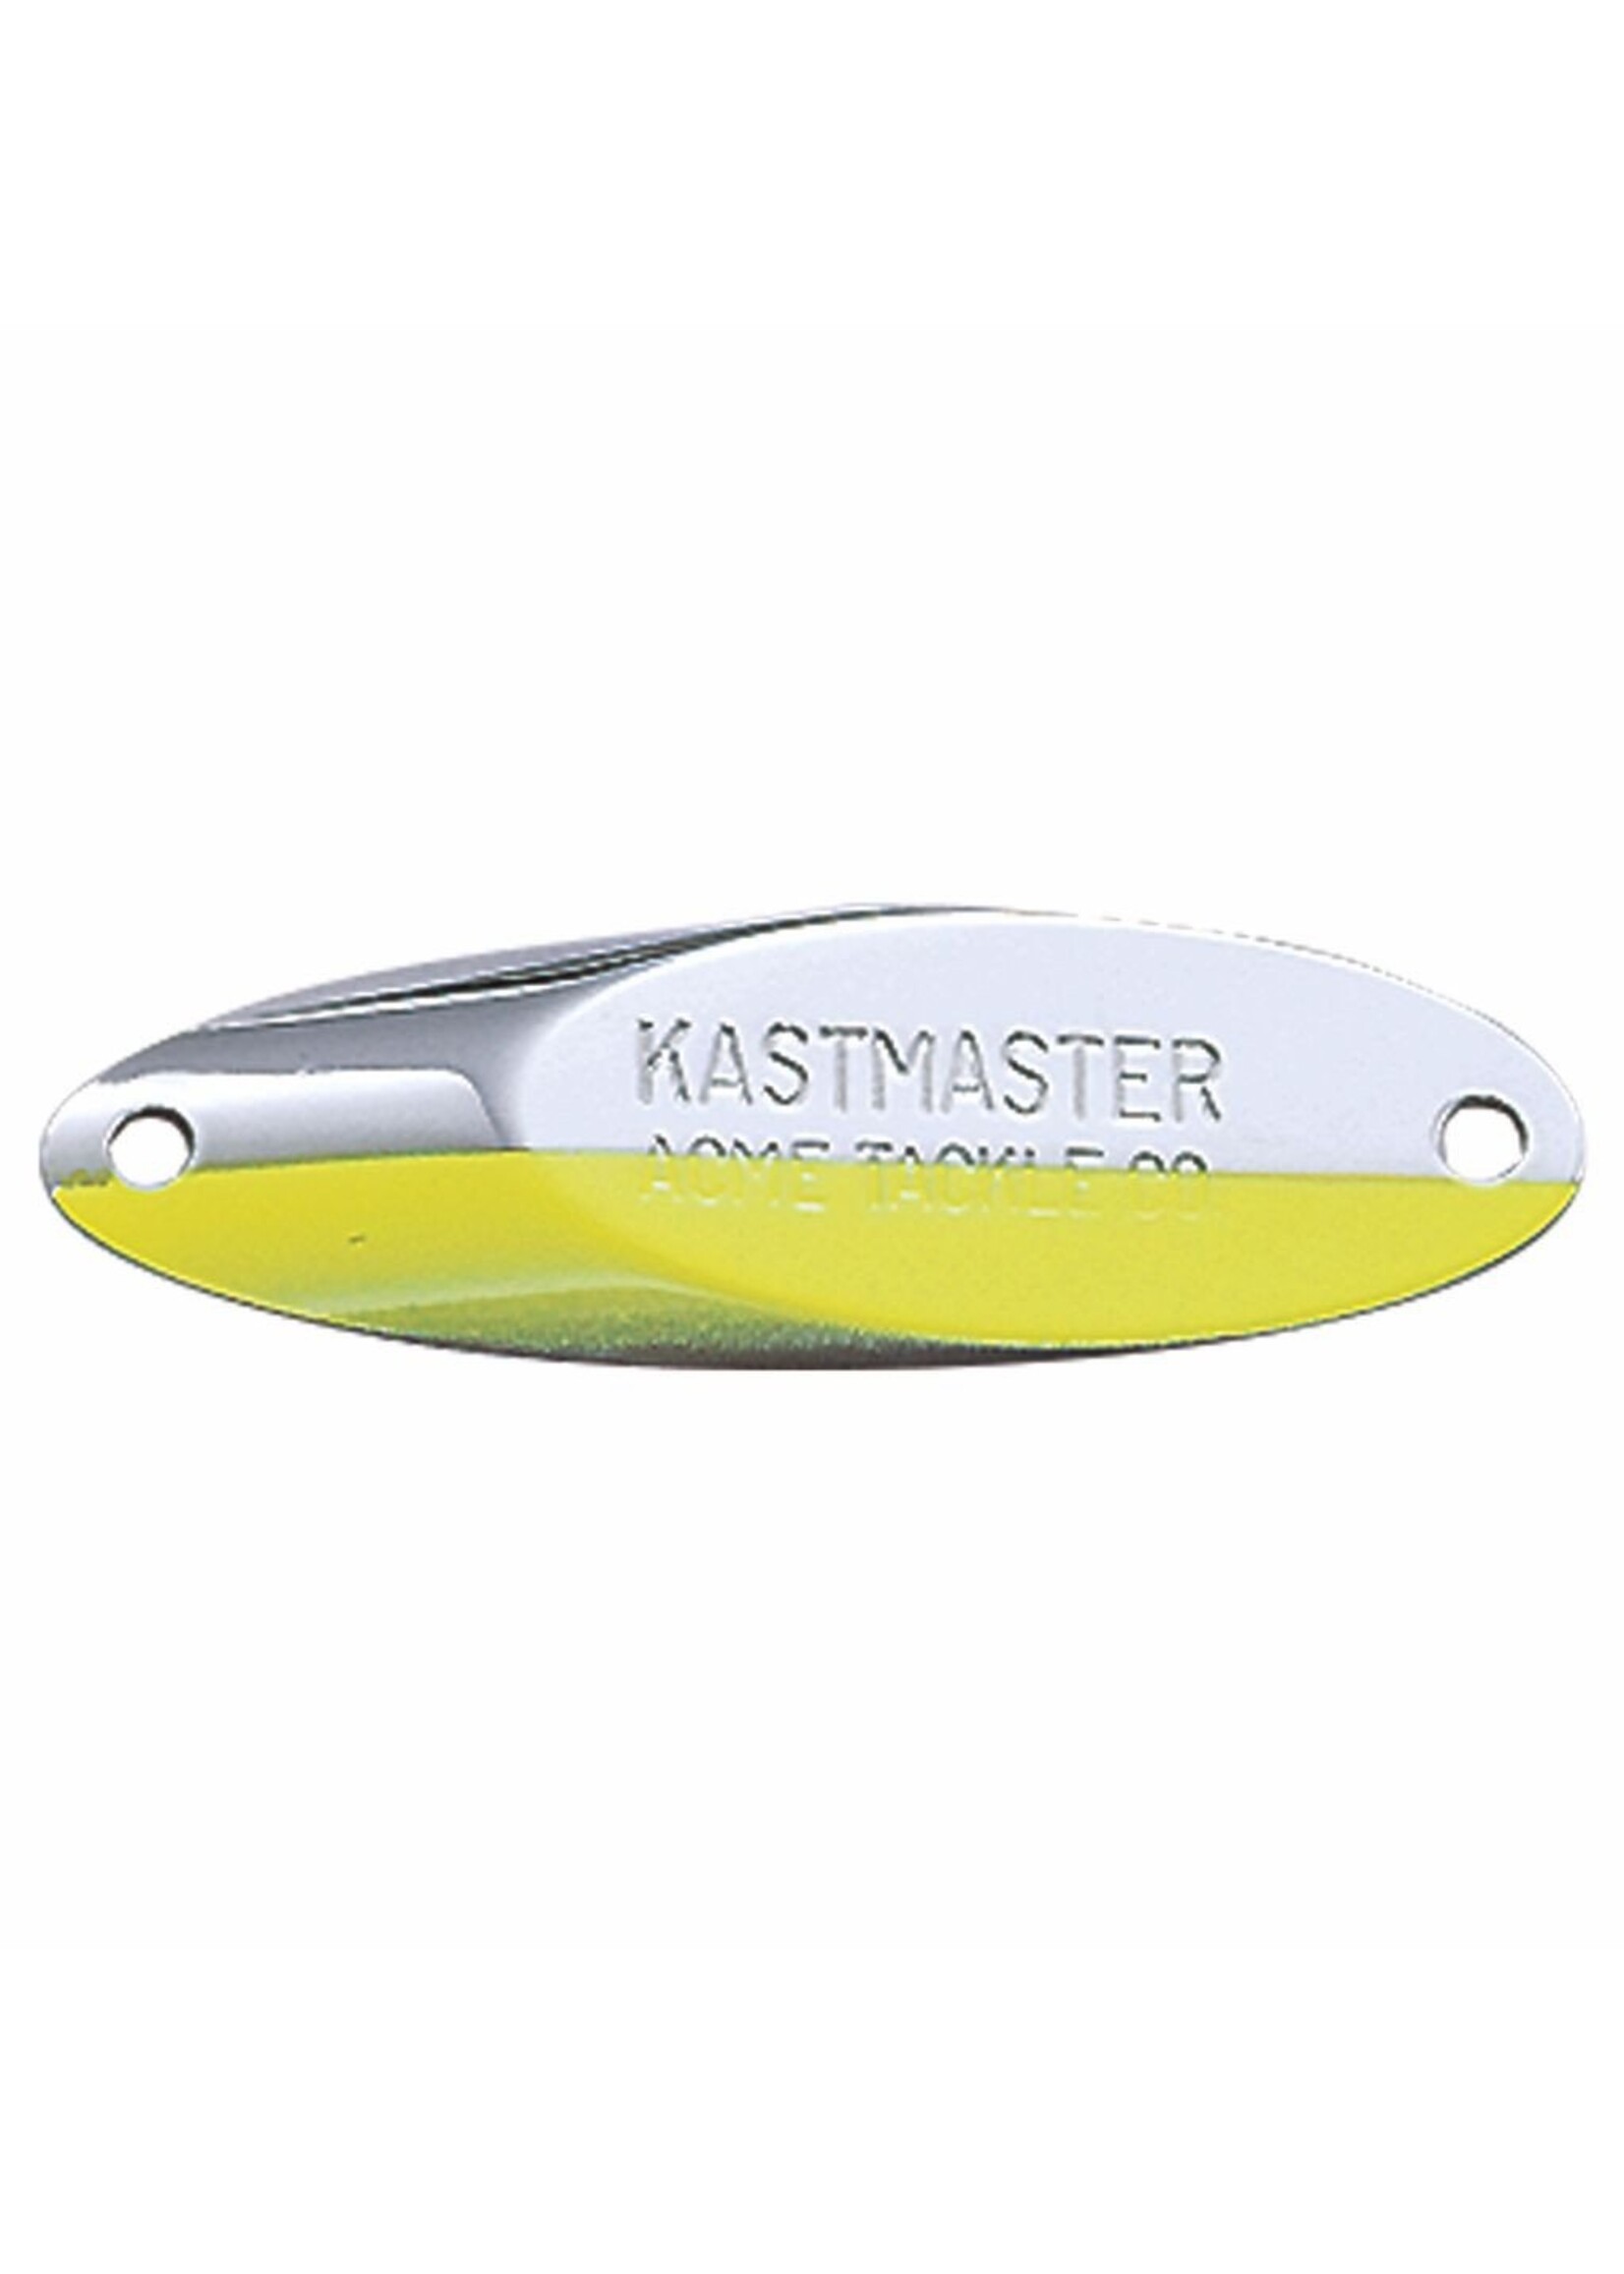 Acme Kastmaster 1/12 Oz. Chrome Neon Blue